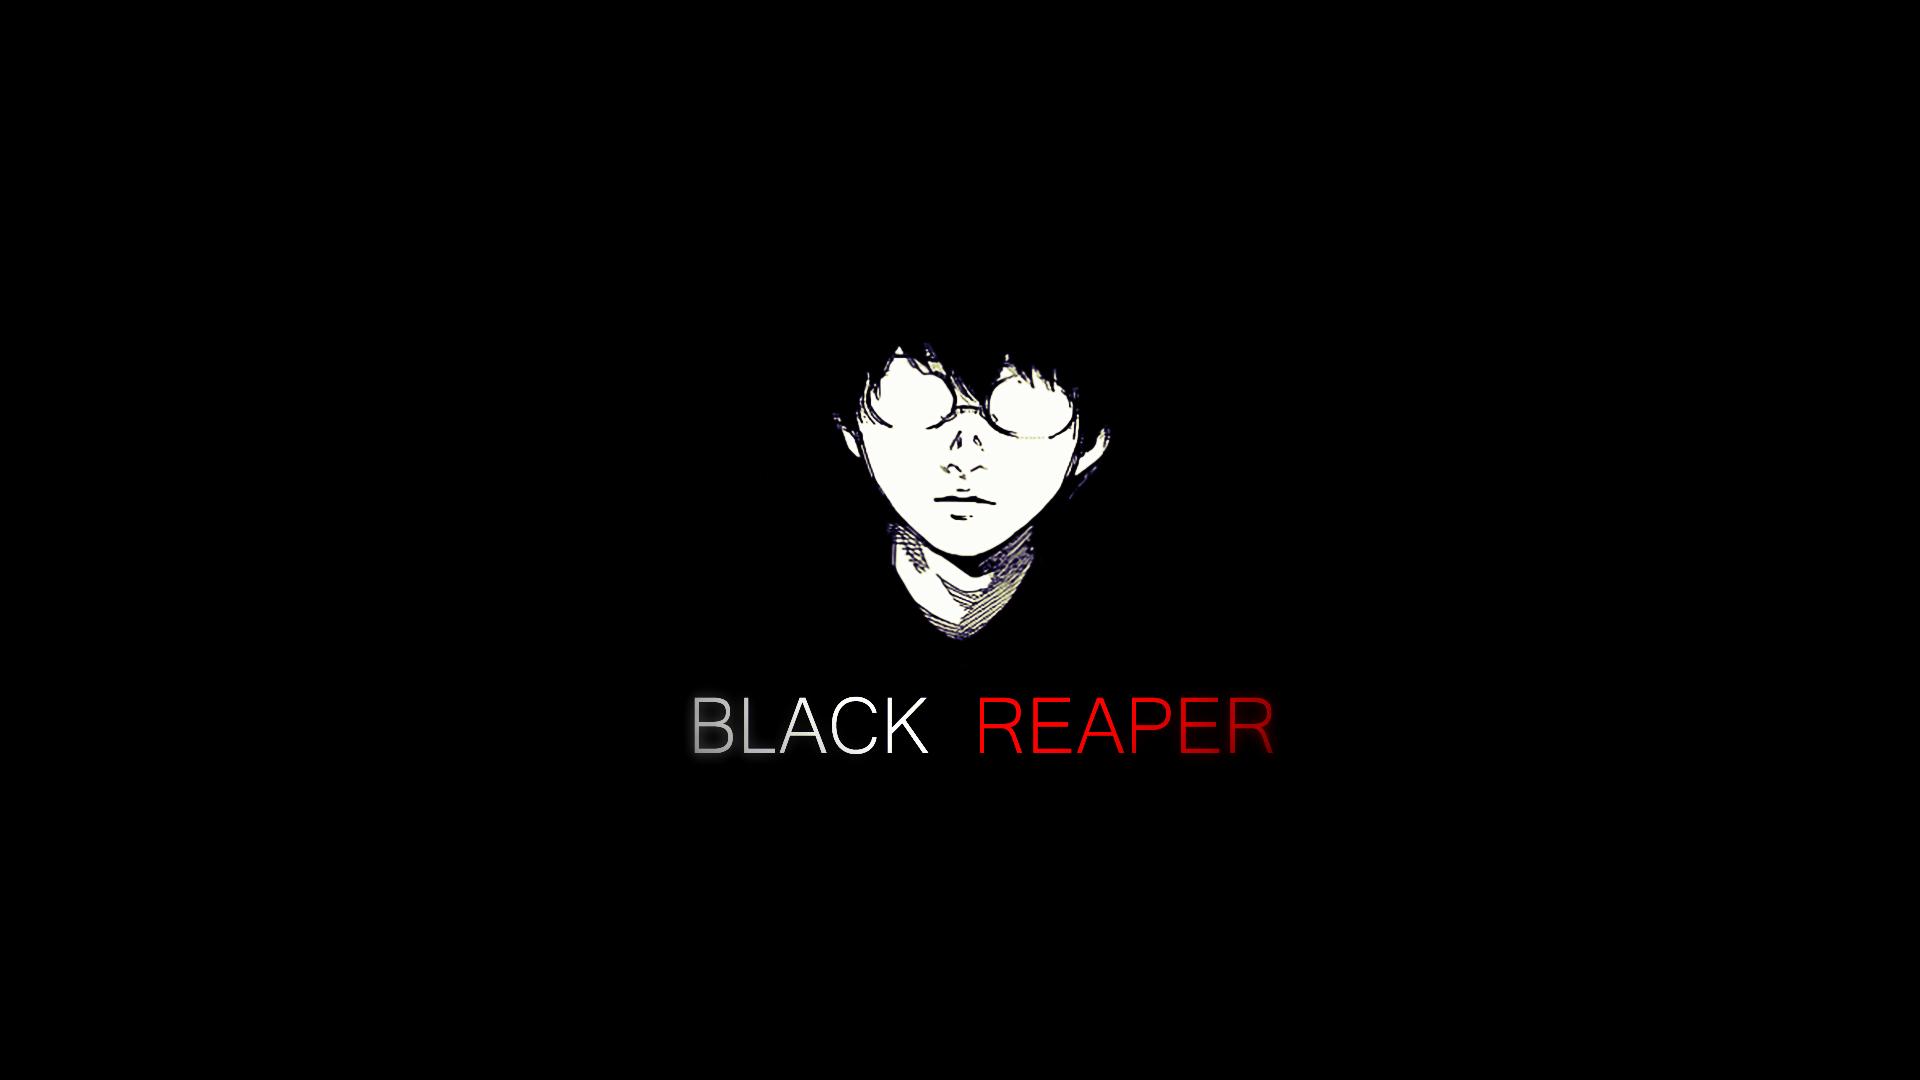 Black Reaper Wallpapers - Top Free Black Reaper Backgrounds